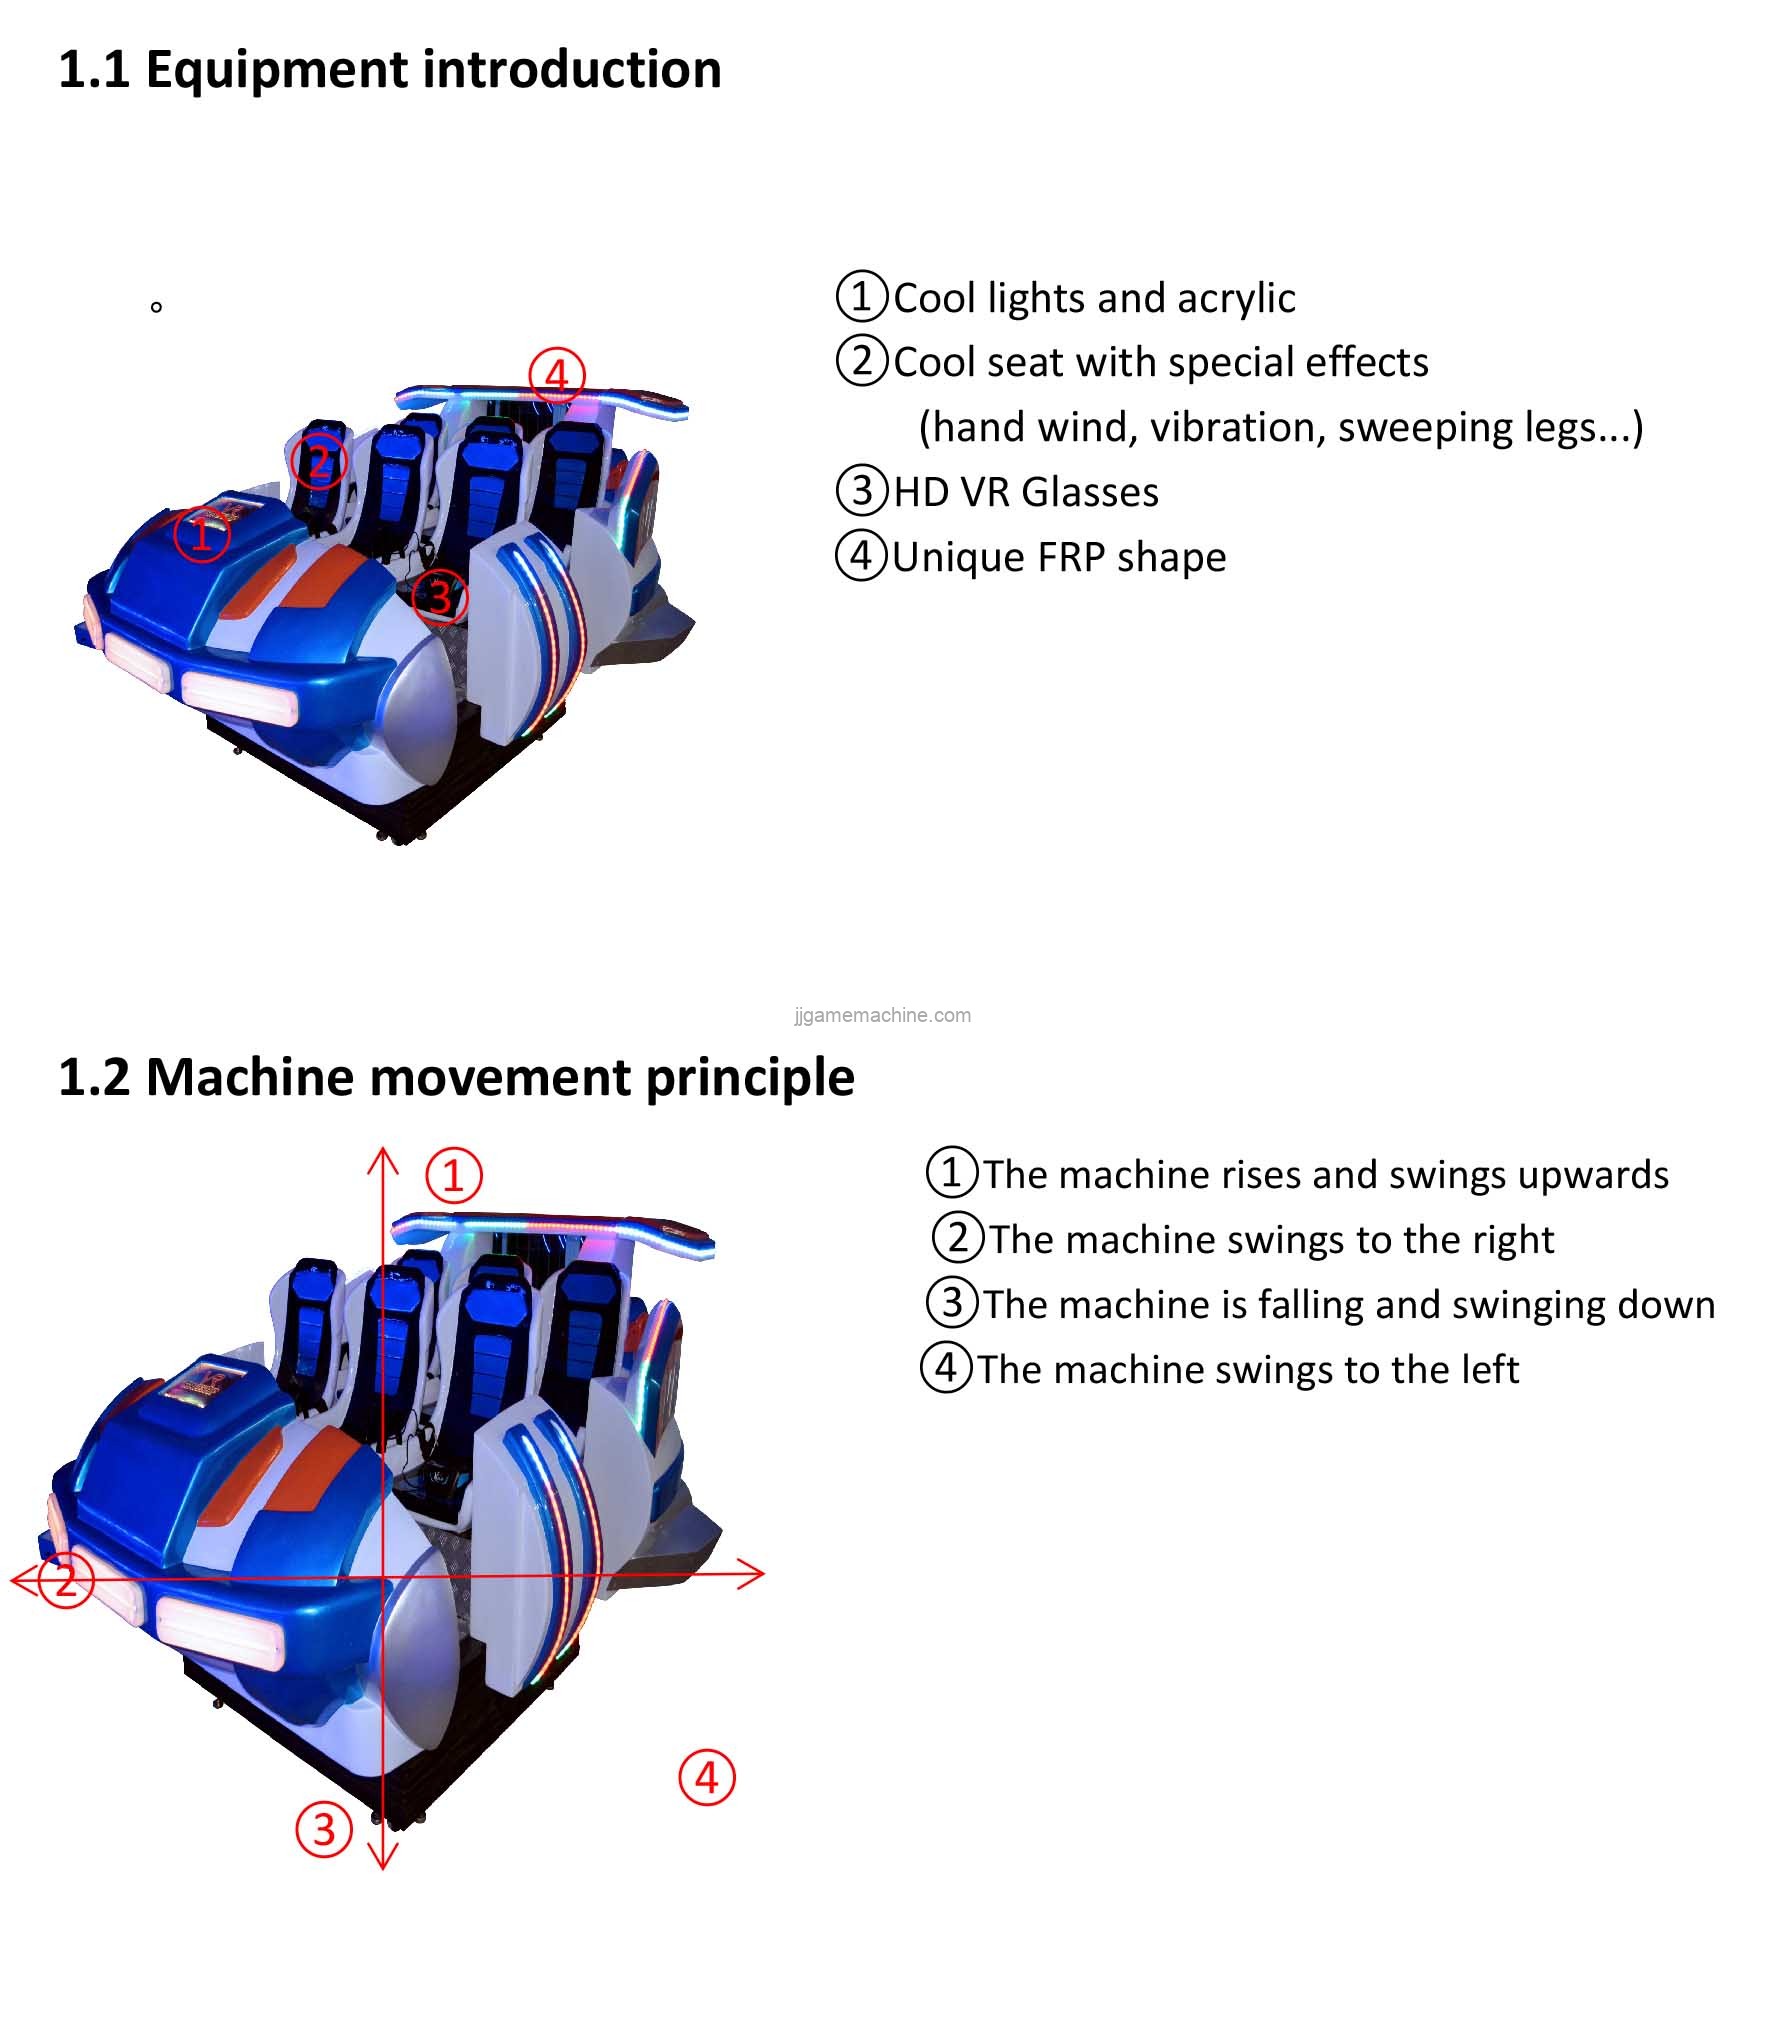 VR equipment 9D vr cinema 6 seats flight simulator blue and white VR spaceship